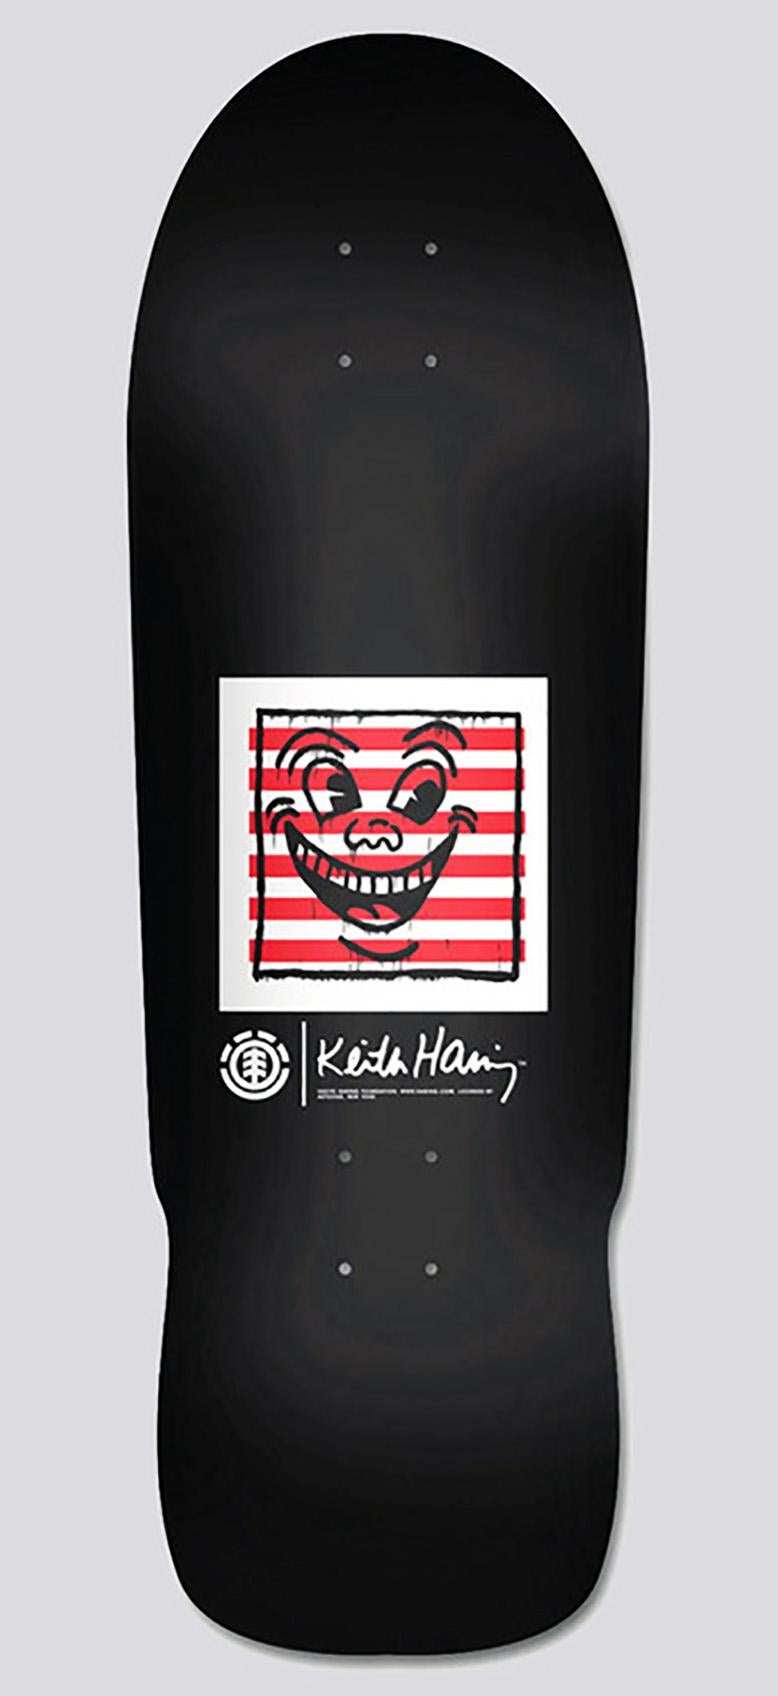 Keith Haring Skateboard Deck (Keith Haring three eyed face) - Pop Art Mixed Media Art by (after) Keith Haring